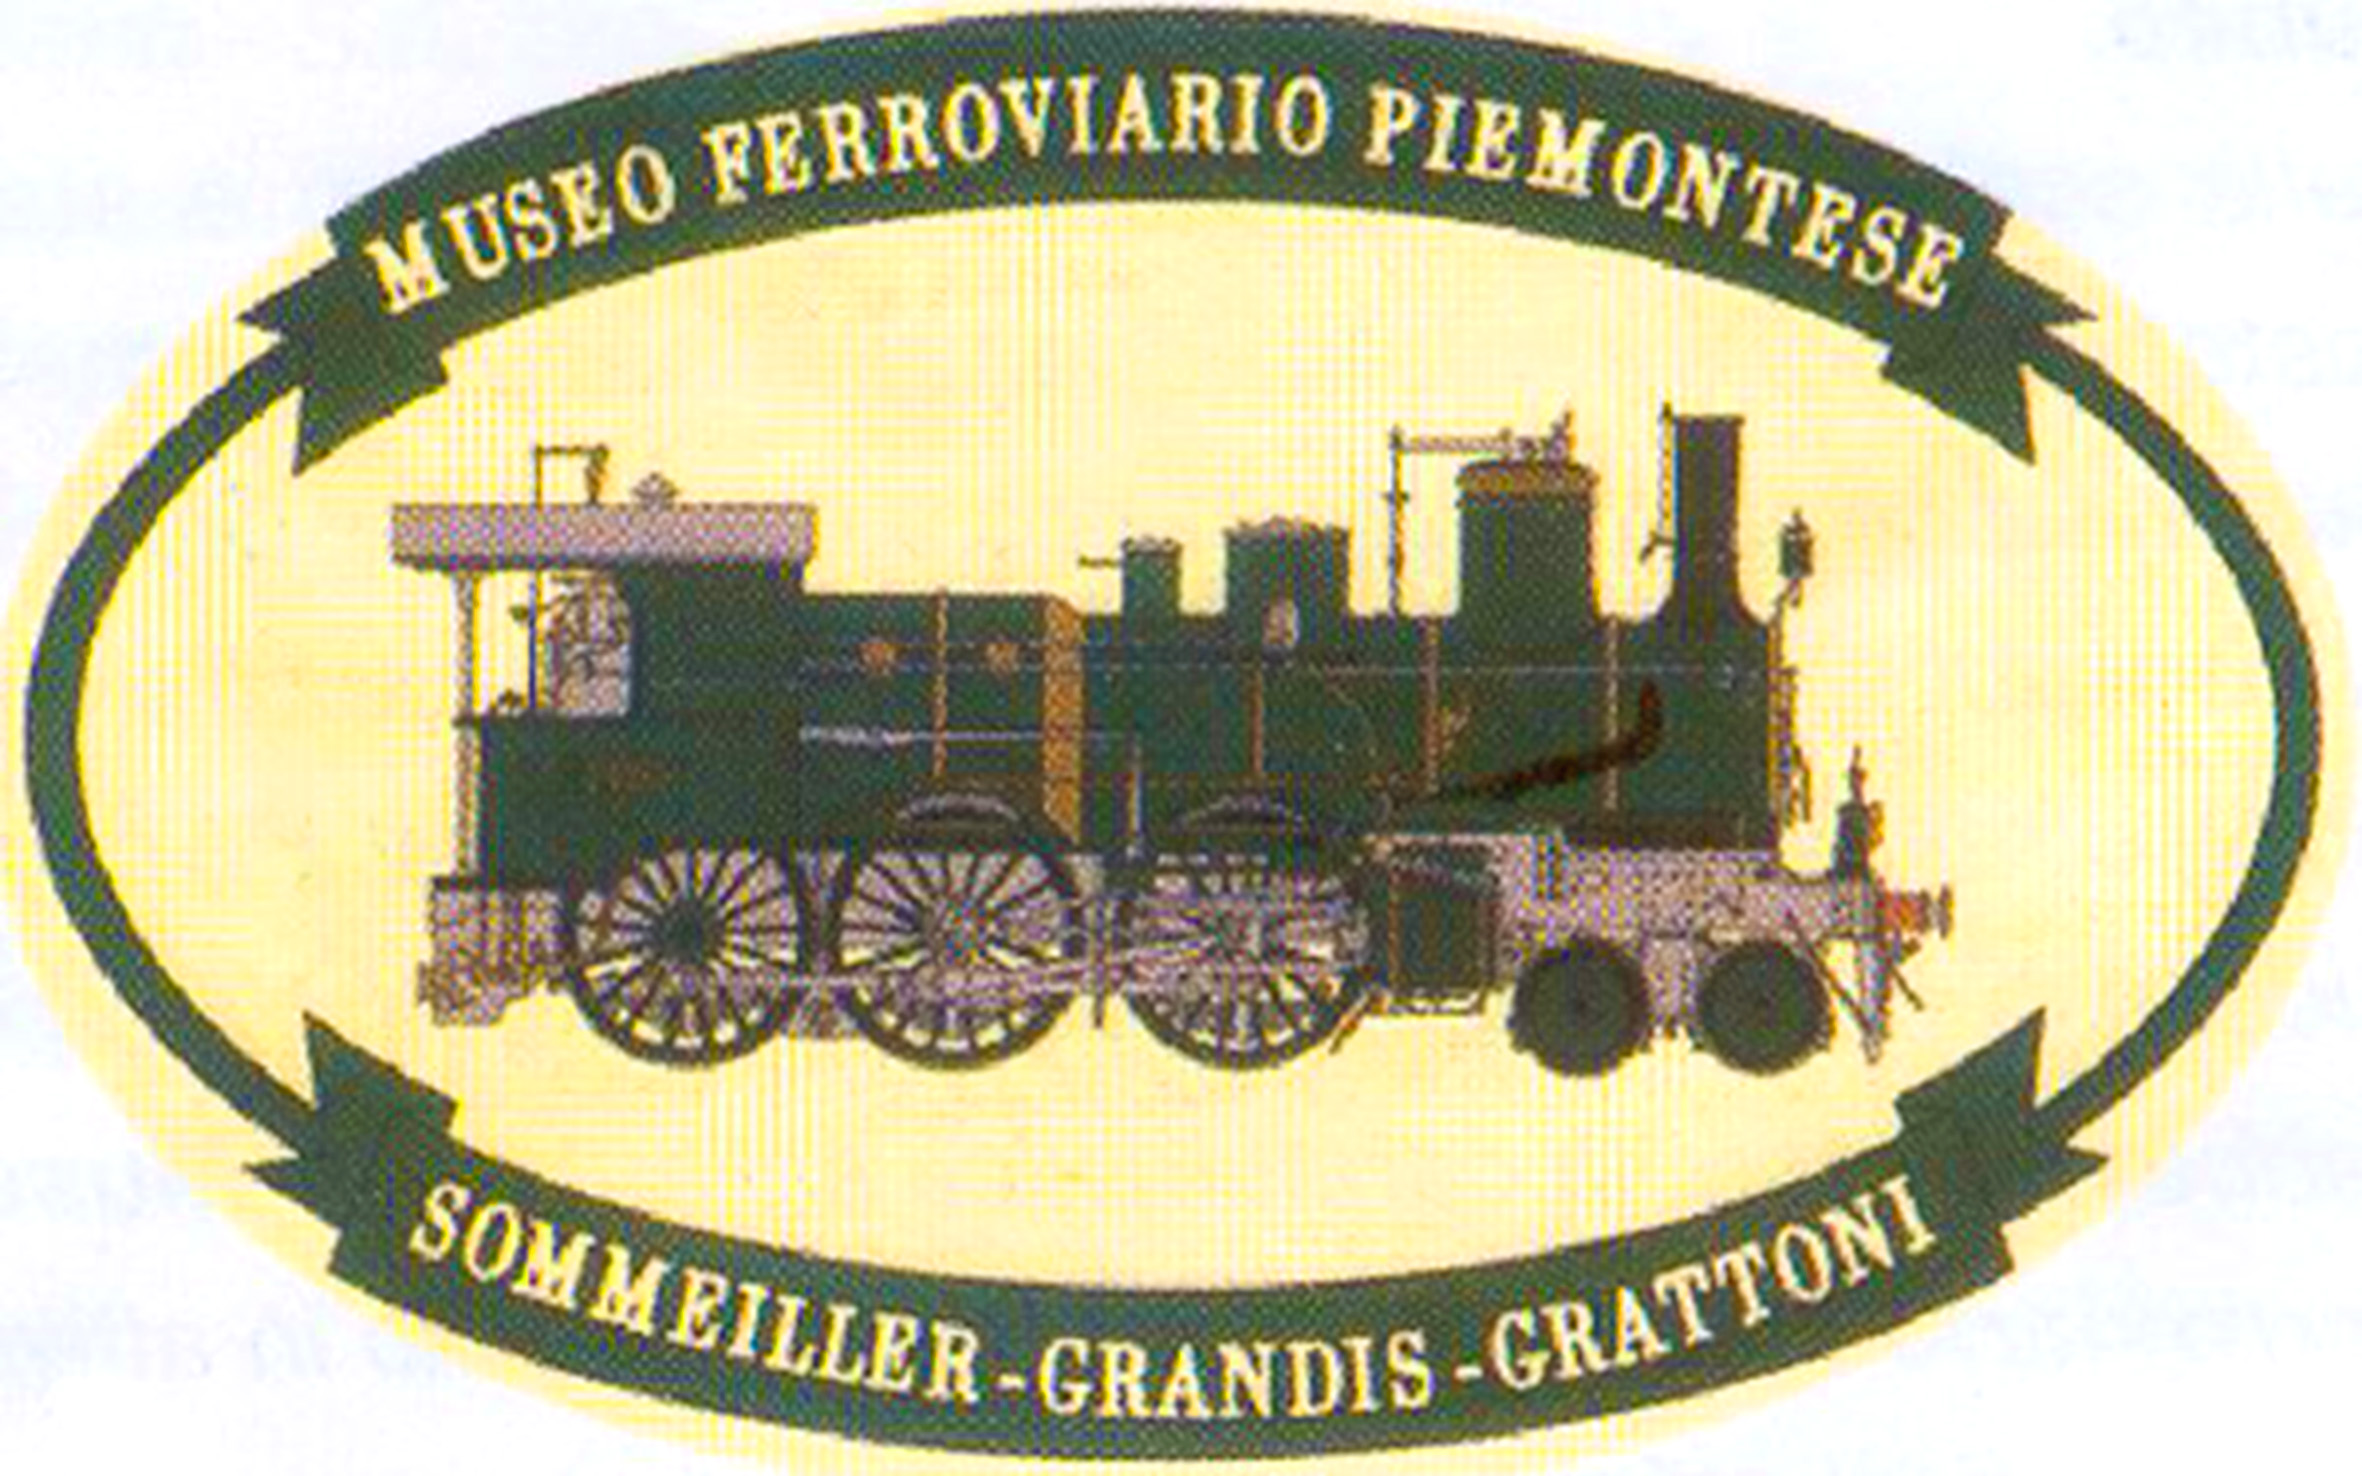 © Museo Ferroviario Piemontese - Sommeiler - Grandis - Grattoni